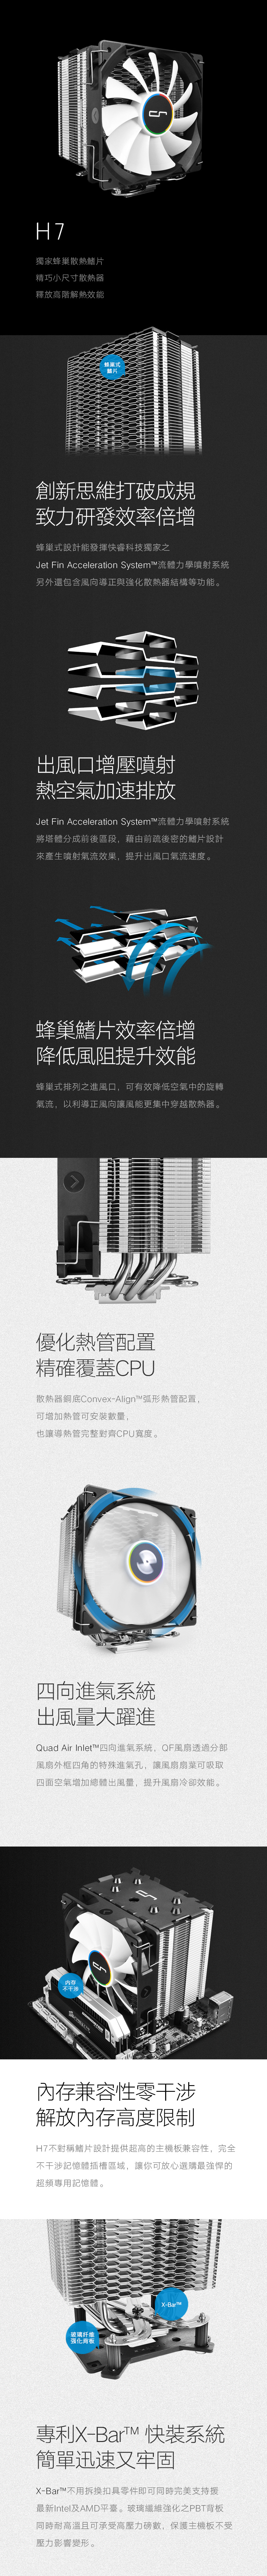 H7-CPU-1.jpg